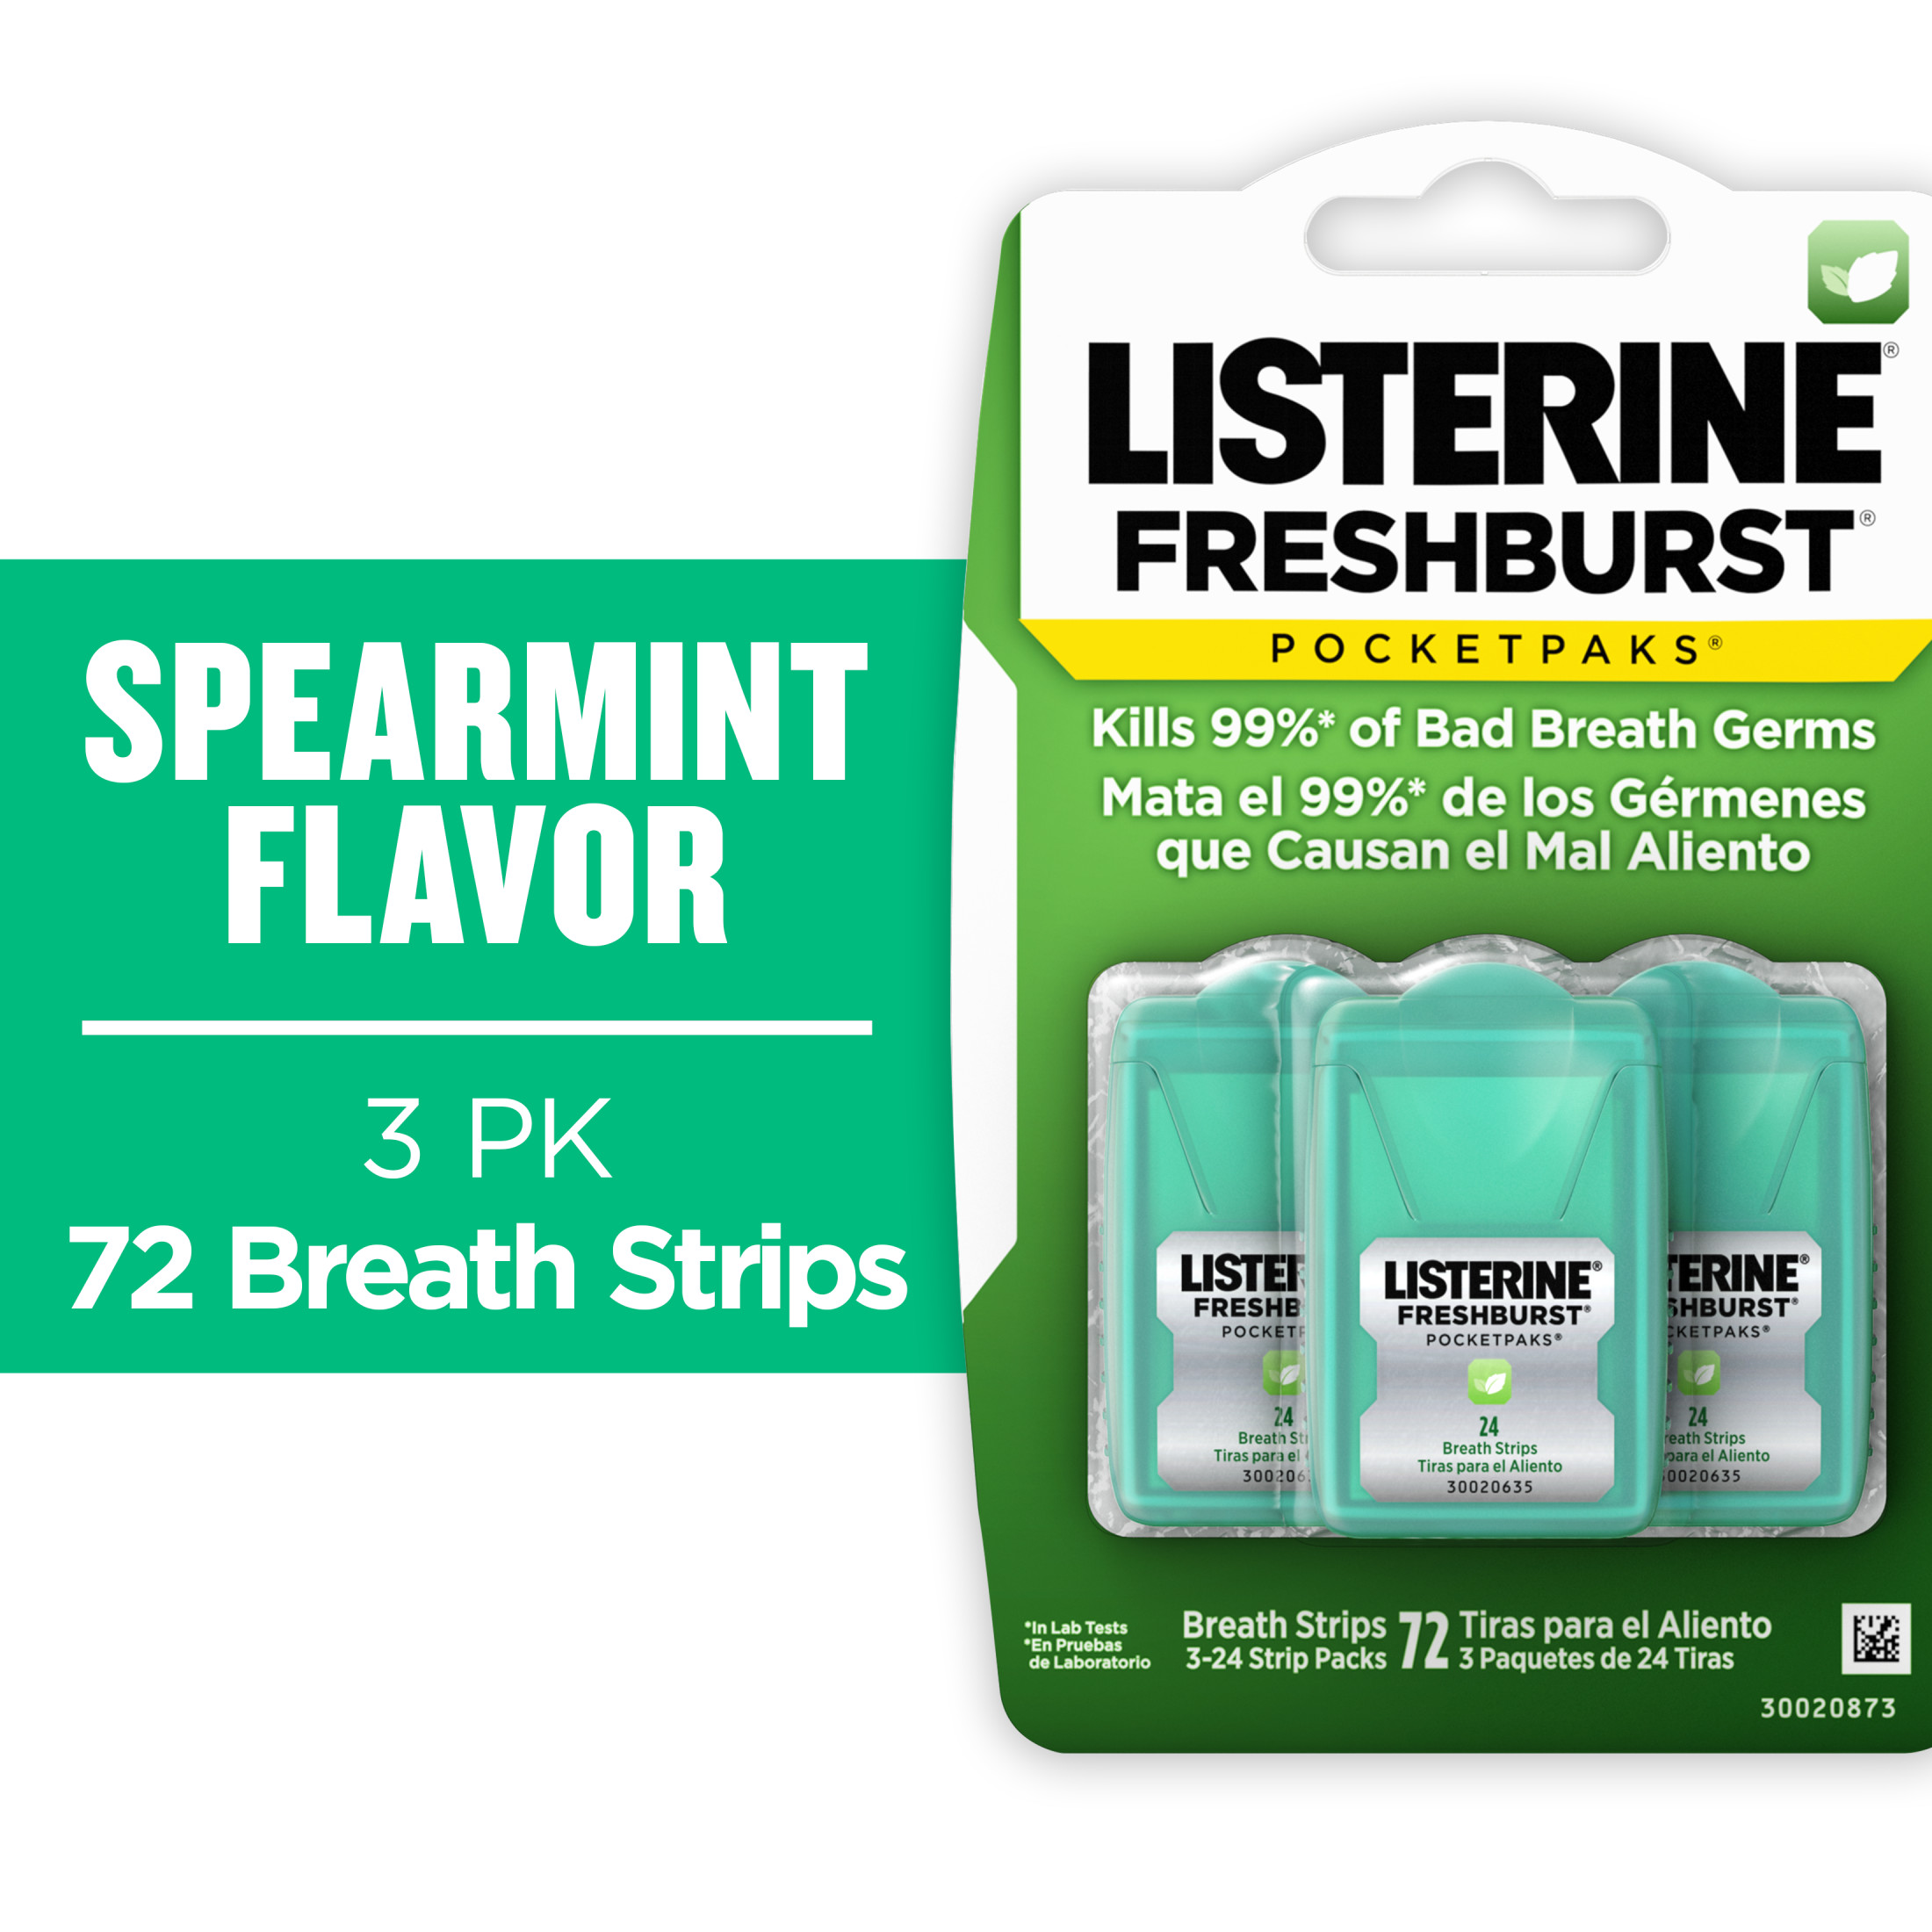 Listerine Freshburst PocketPaks Oral Care Breath Strips, Breath Spray Alternative, 24 Ct, 3 pack - image 1 of 8